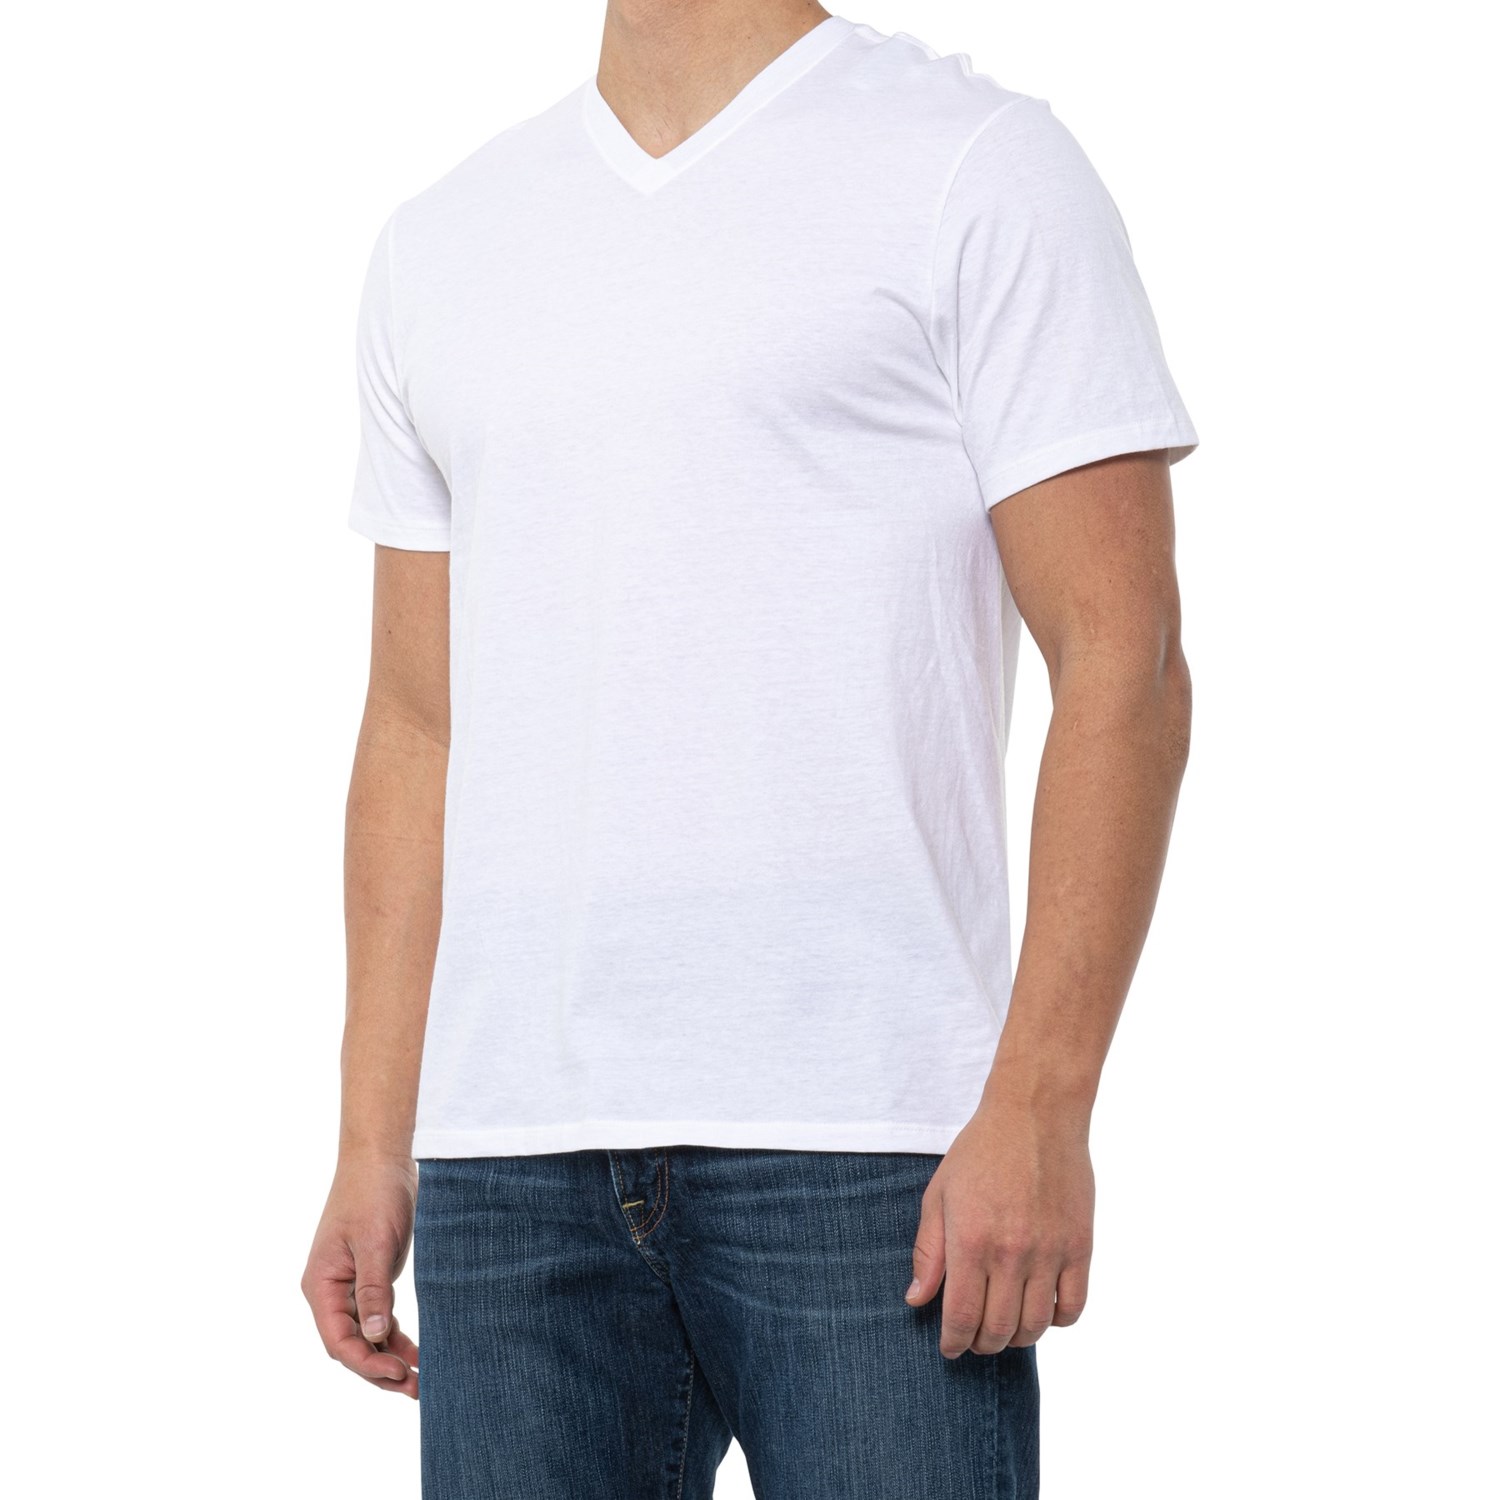 Hurley Mens Premium Cotton Staple Short Sleeve Tee Shirt